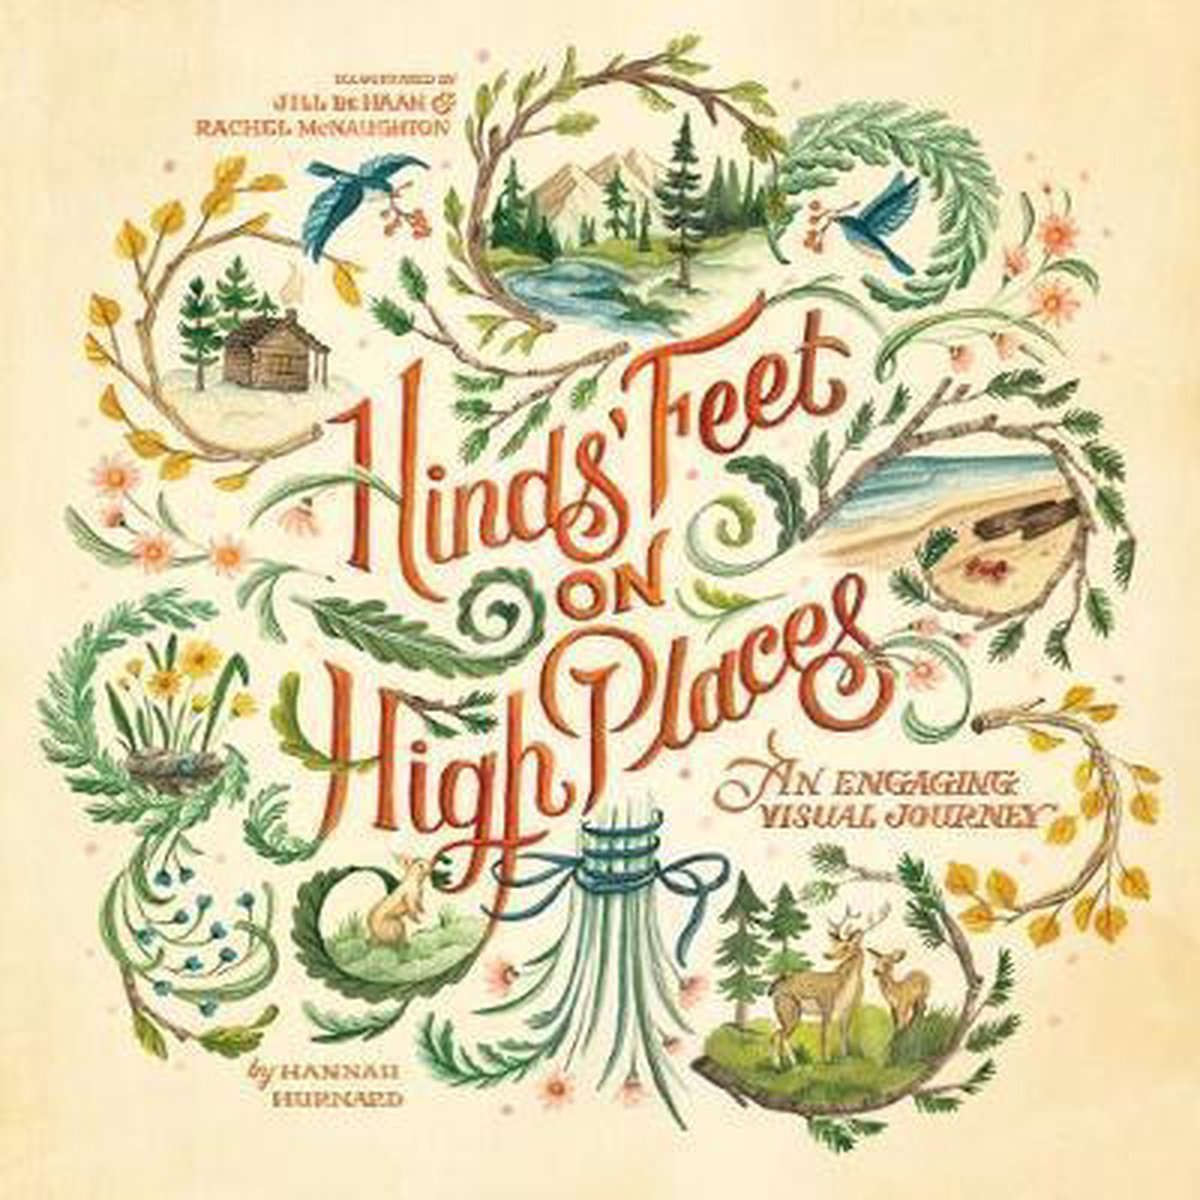 Hinds' Feet on High Places Visual Journey - Hannah Hurnard